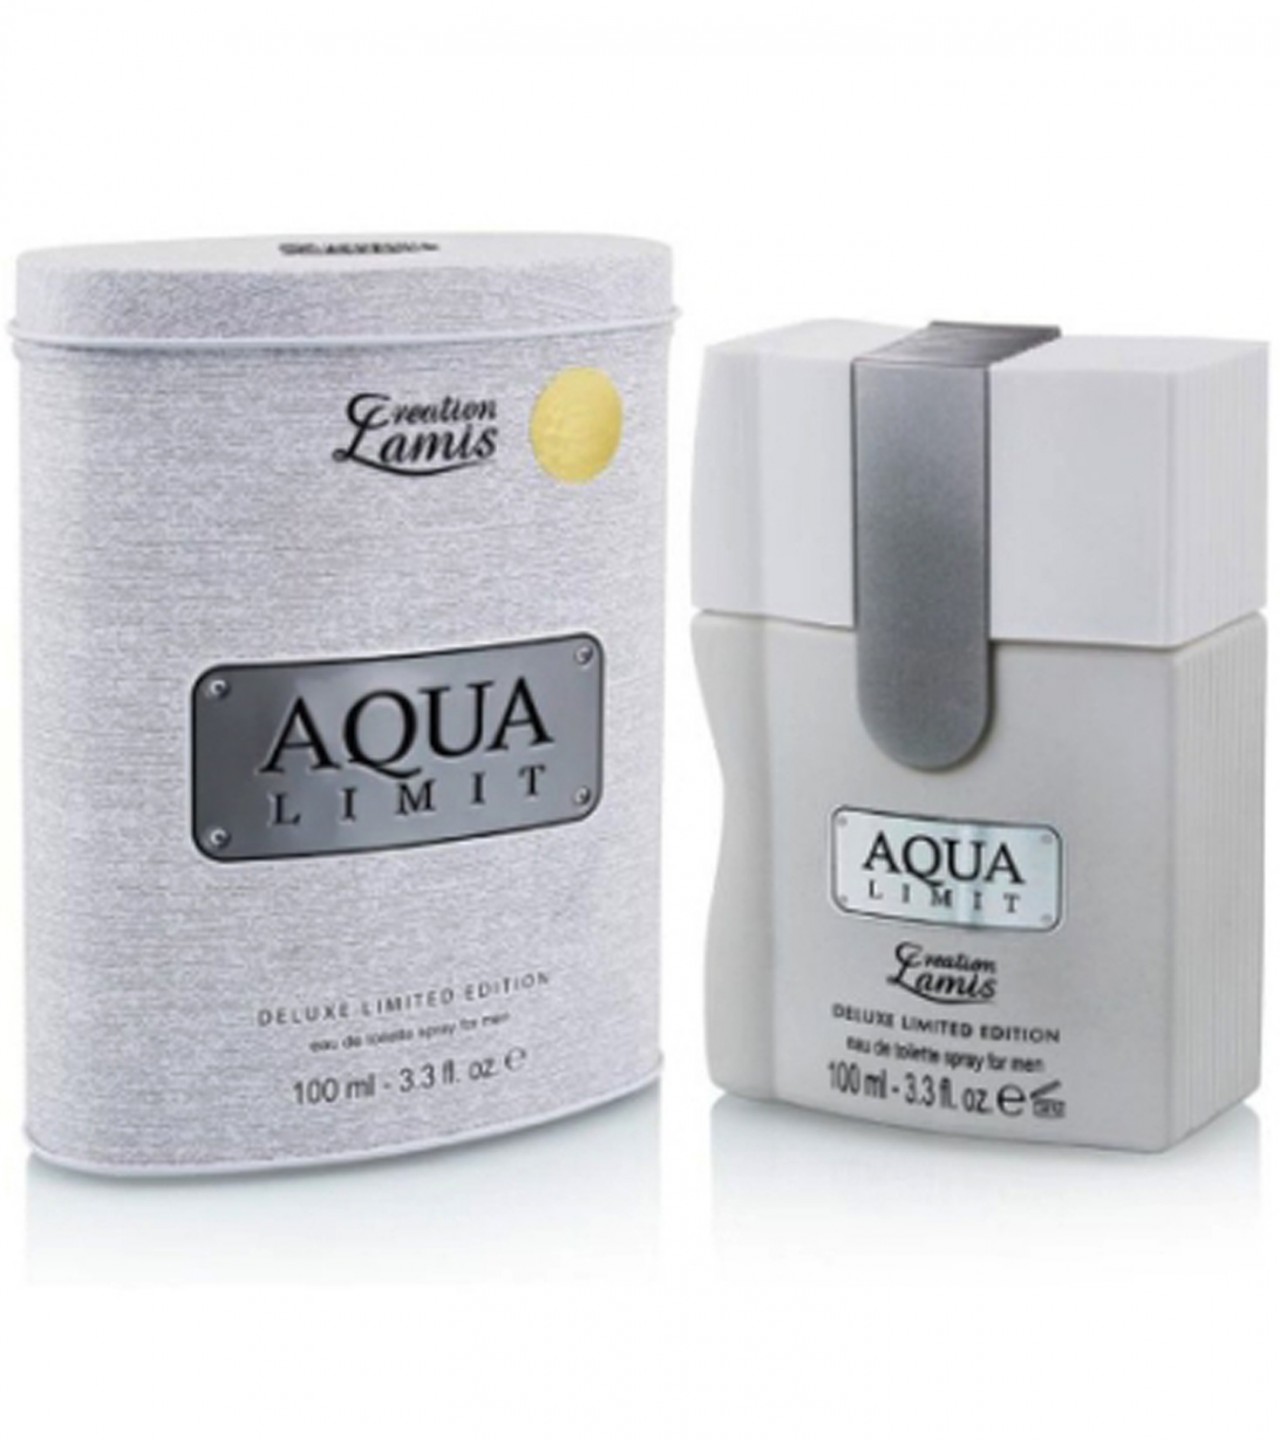 Creation Lamis Aqua Limit Perfume For Men – 100 ml